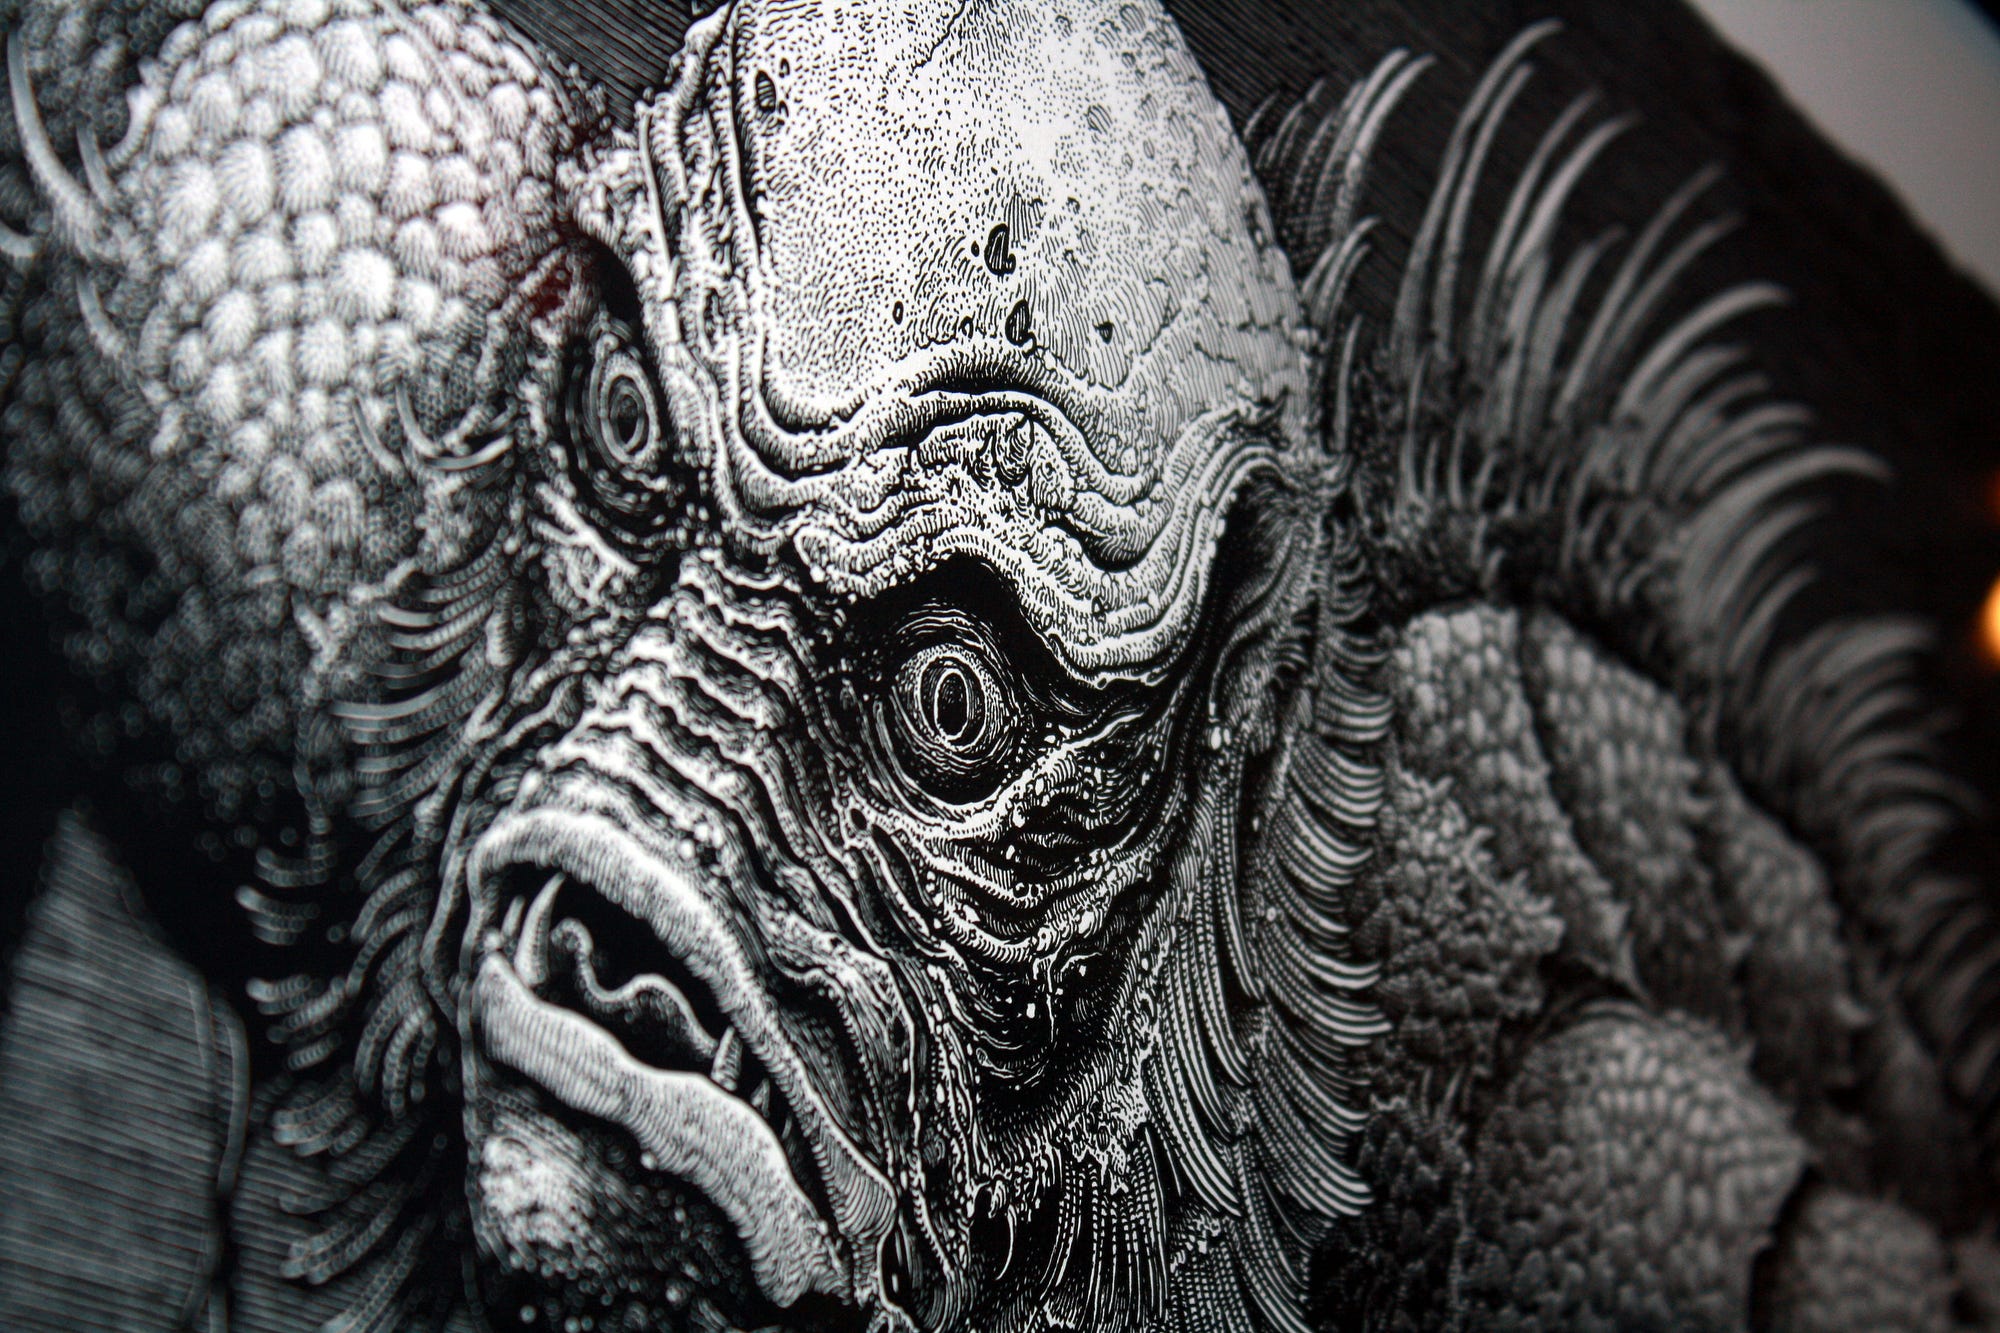 A Look At Mondo Universal Monsters Art Exhibit Opening This Week!